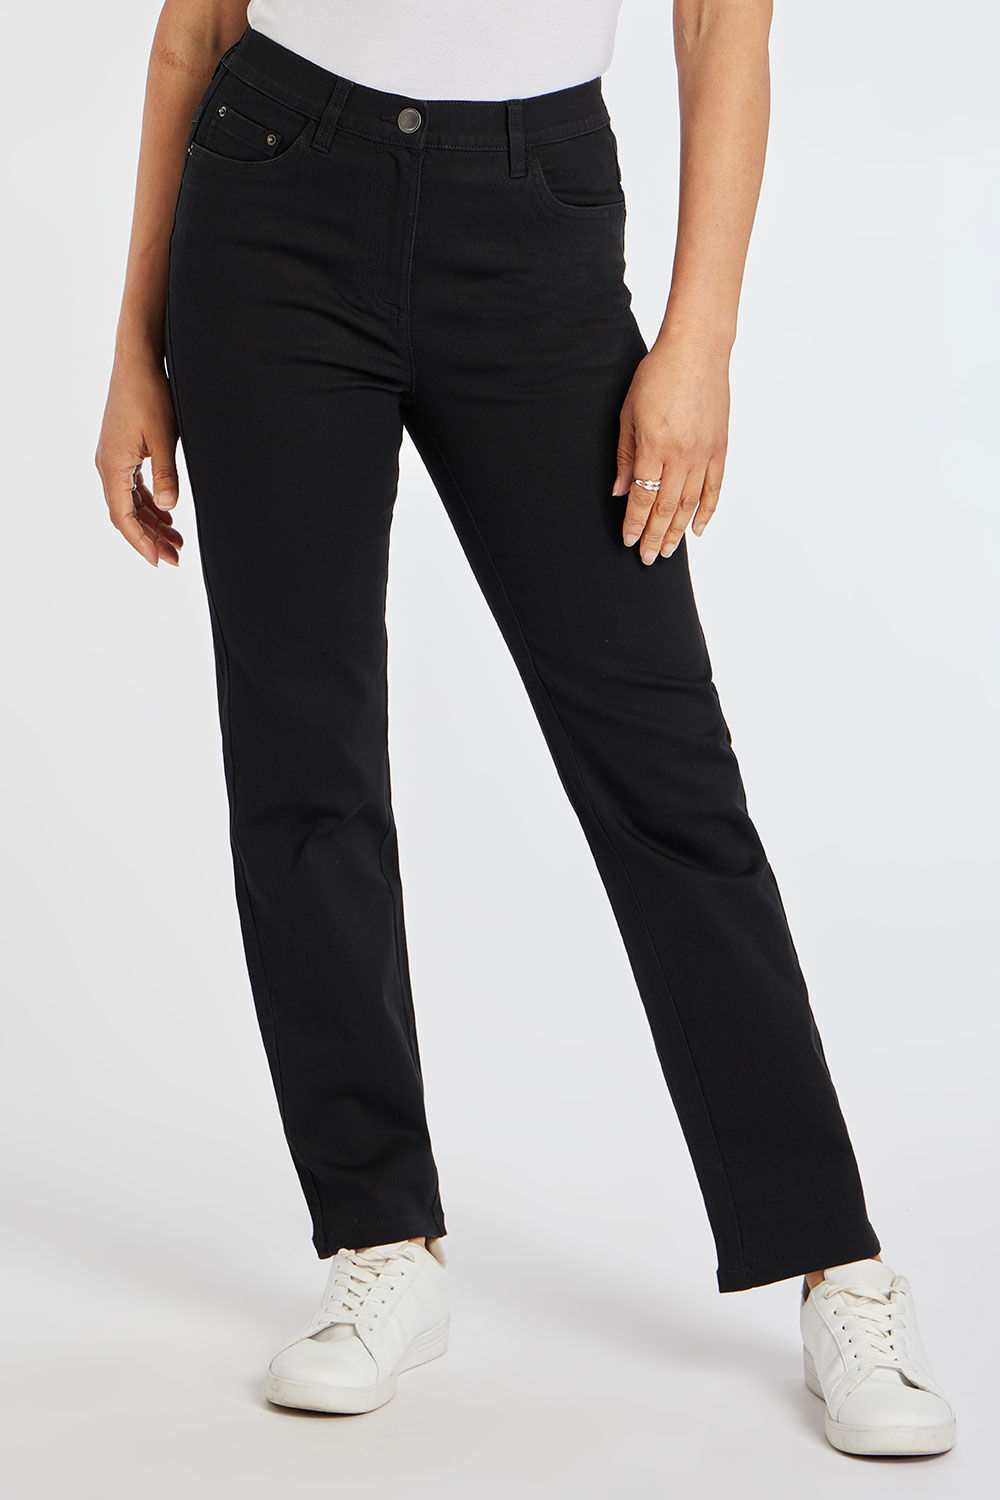 Bonmarche Women’s Black Cotton Casual The SARA Straight Leg Jeans, Size: 10